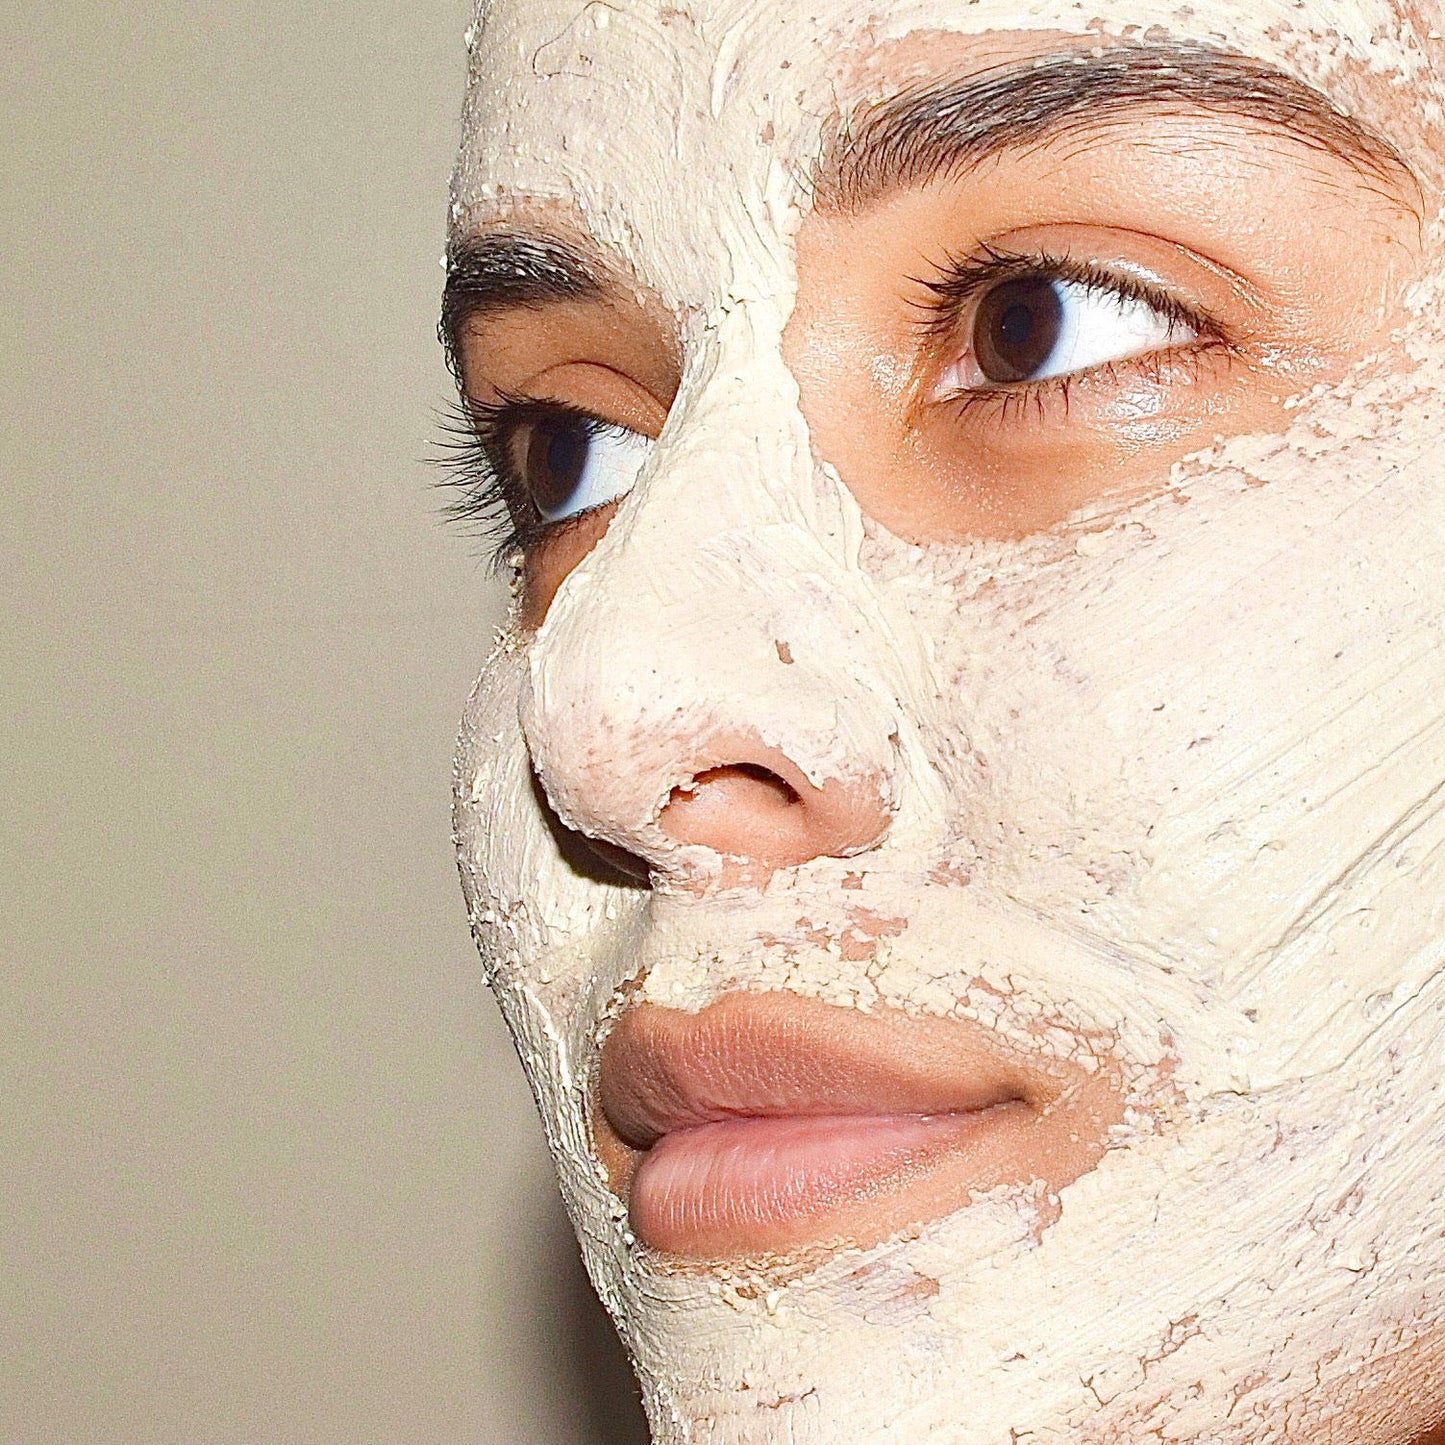 Peachy White Advance Clay Mask Nicci Skin Care